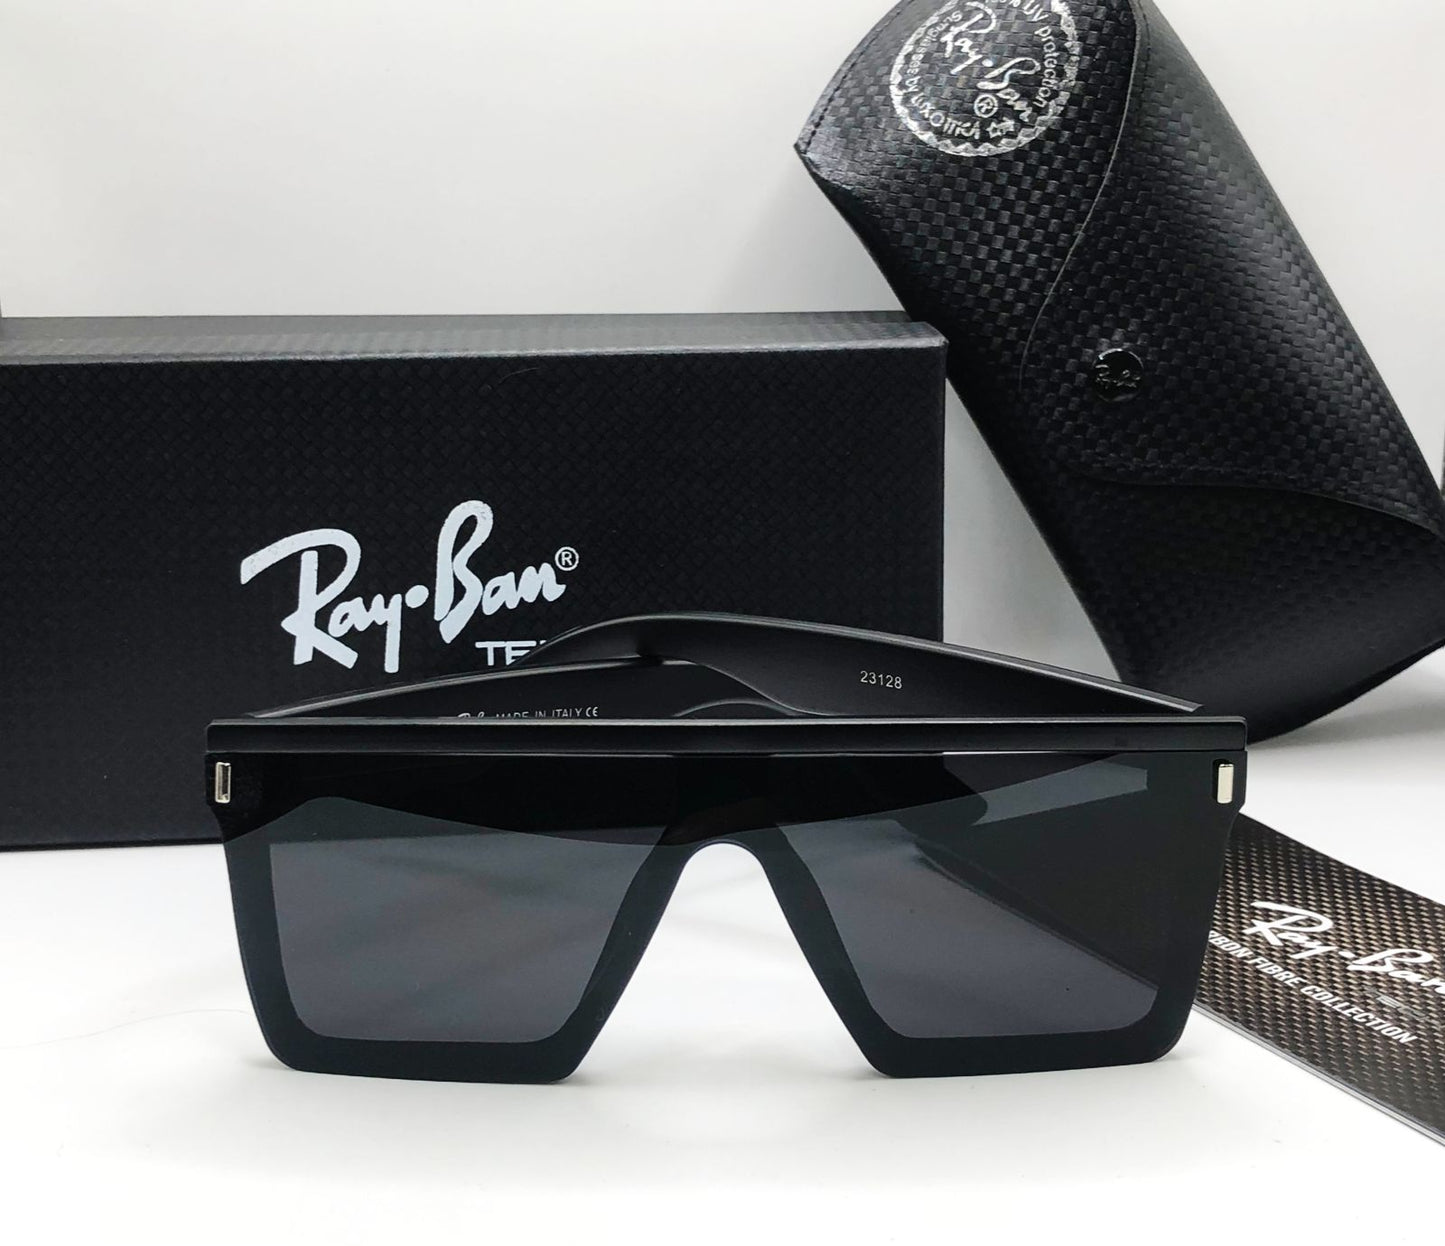 Rayban One peice Sunglasses